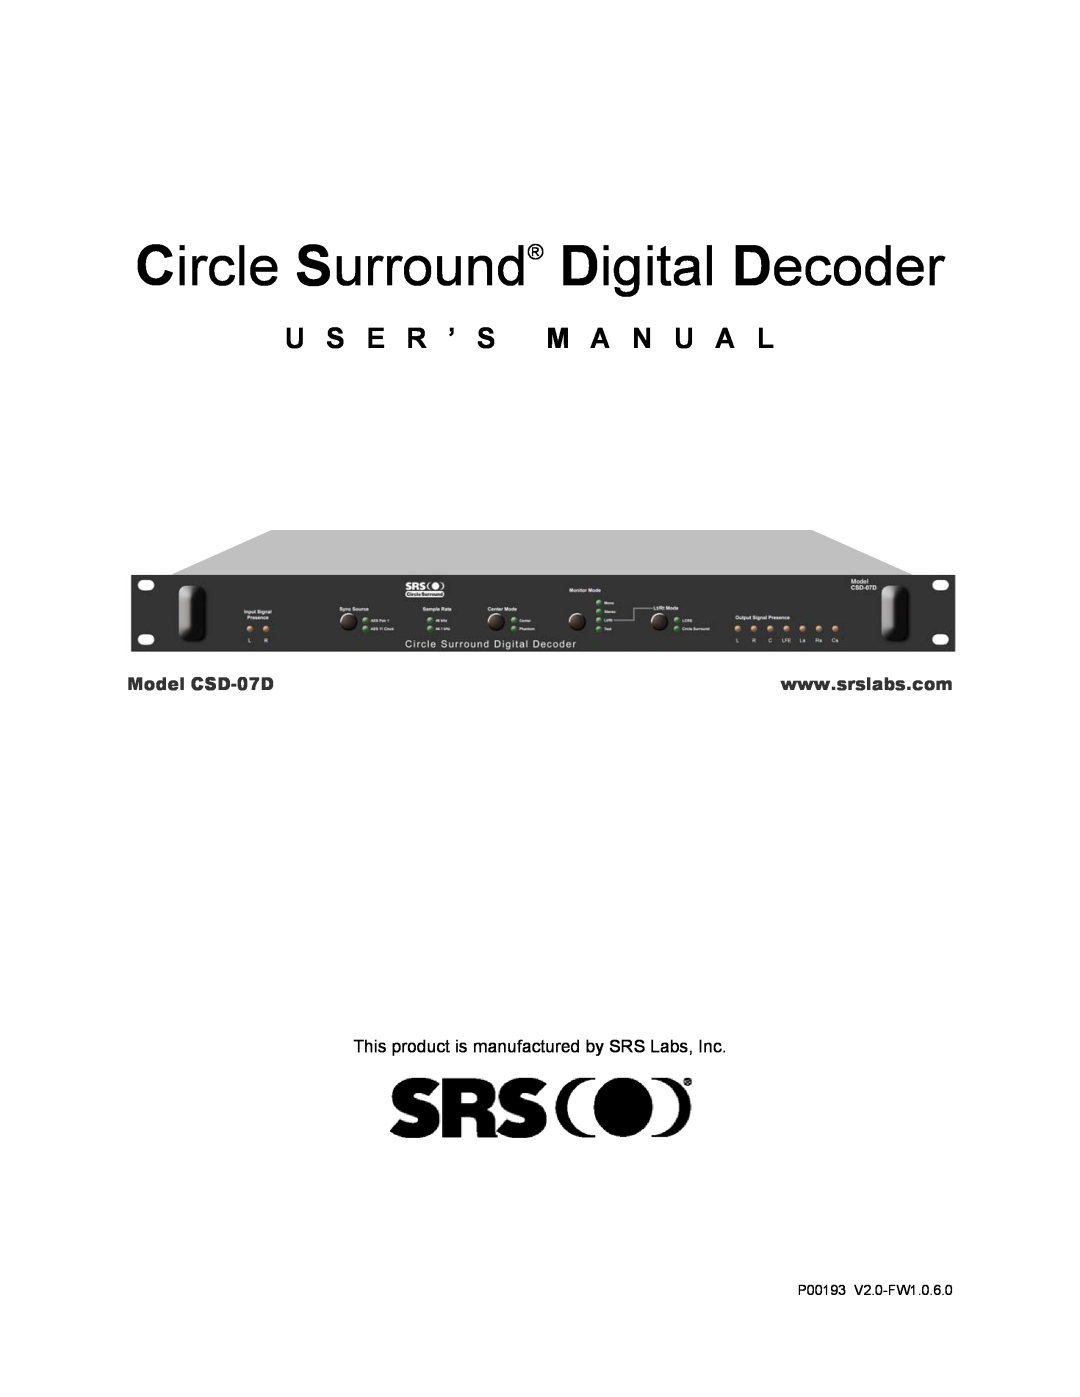 SRS Labs user manual Circle Surround Digital Decoder, U S E R ’ S M A N U A L, Model CSD-07D, P00193 V2.0-FW1.0.6.0 